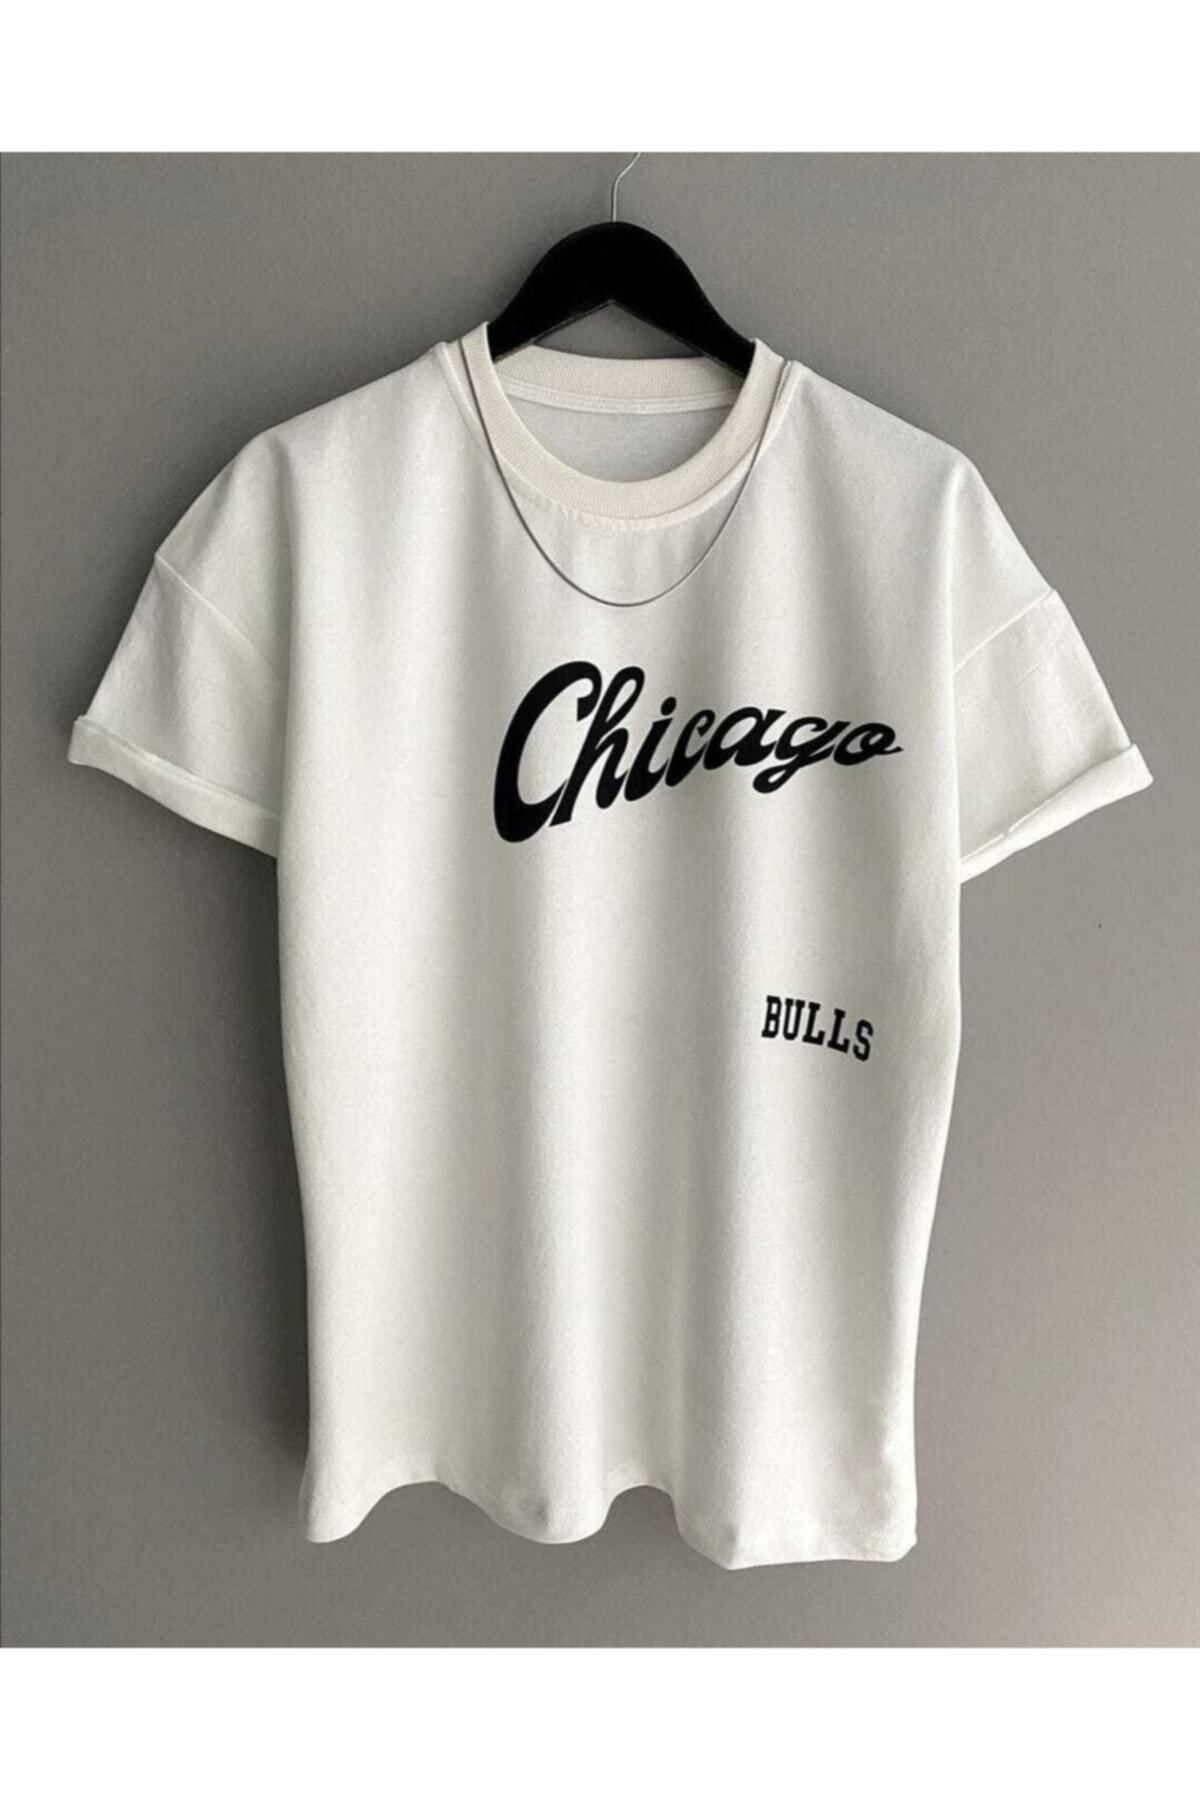 Horbia outdoors Unisex Chicago Özel Baskılı Oversize Penye T-shirt Tişört